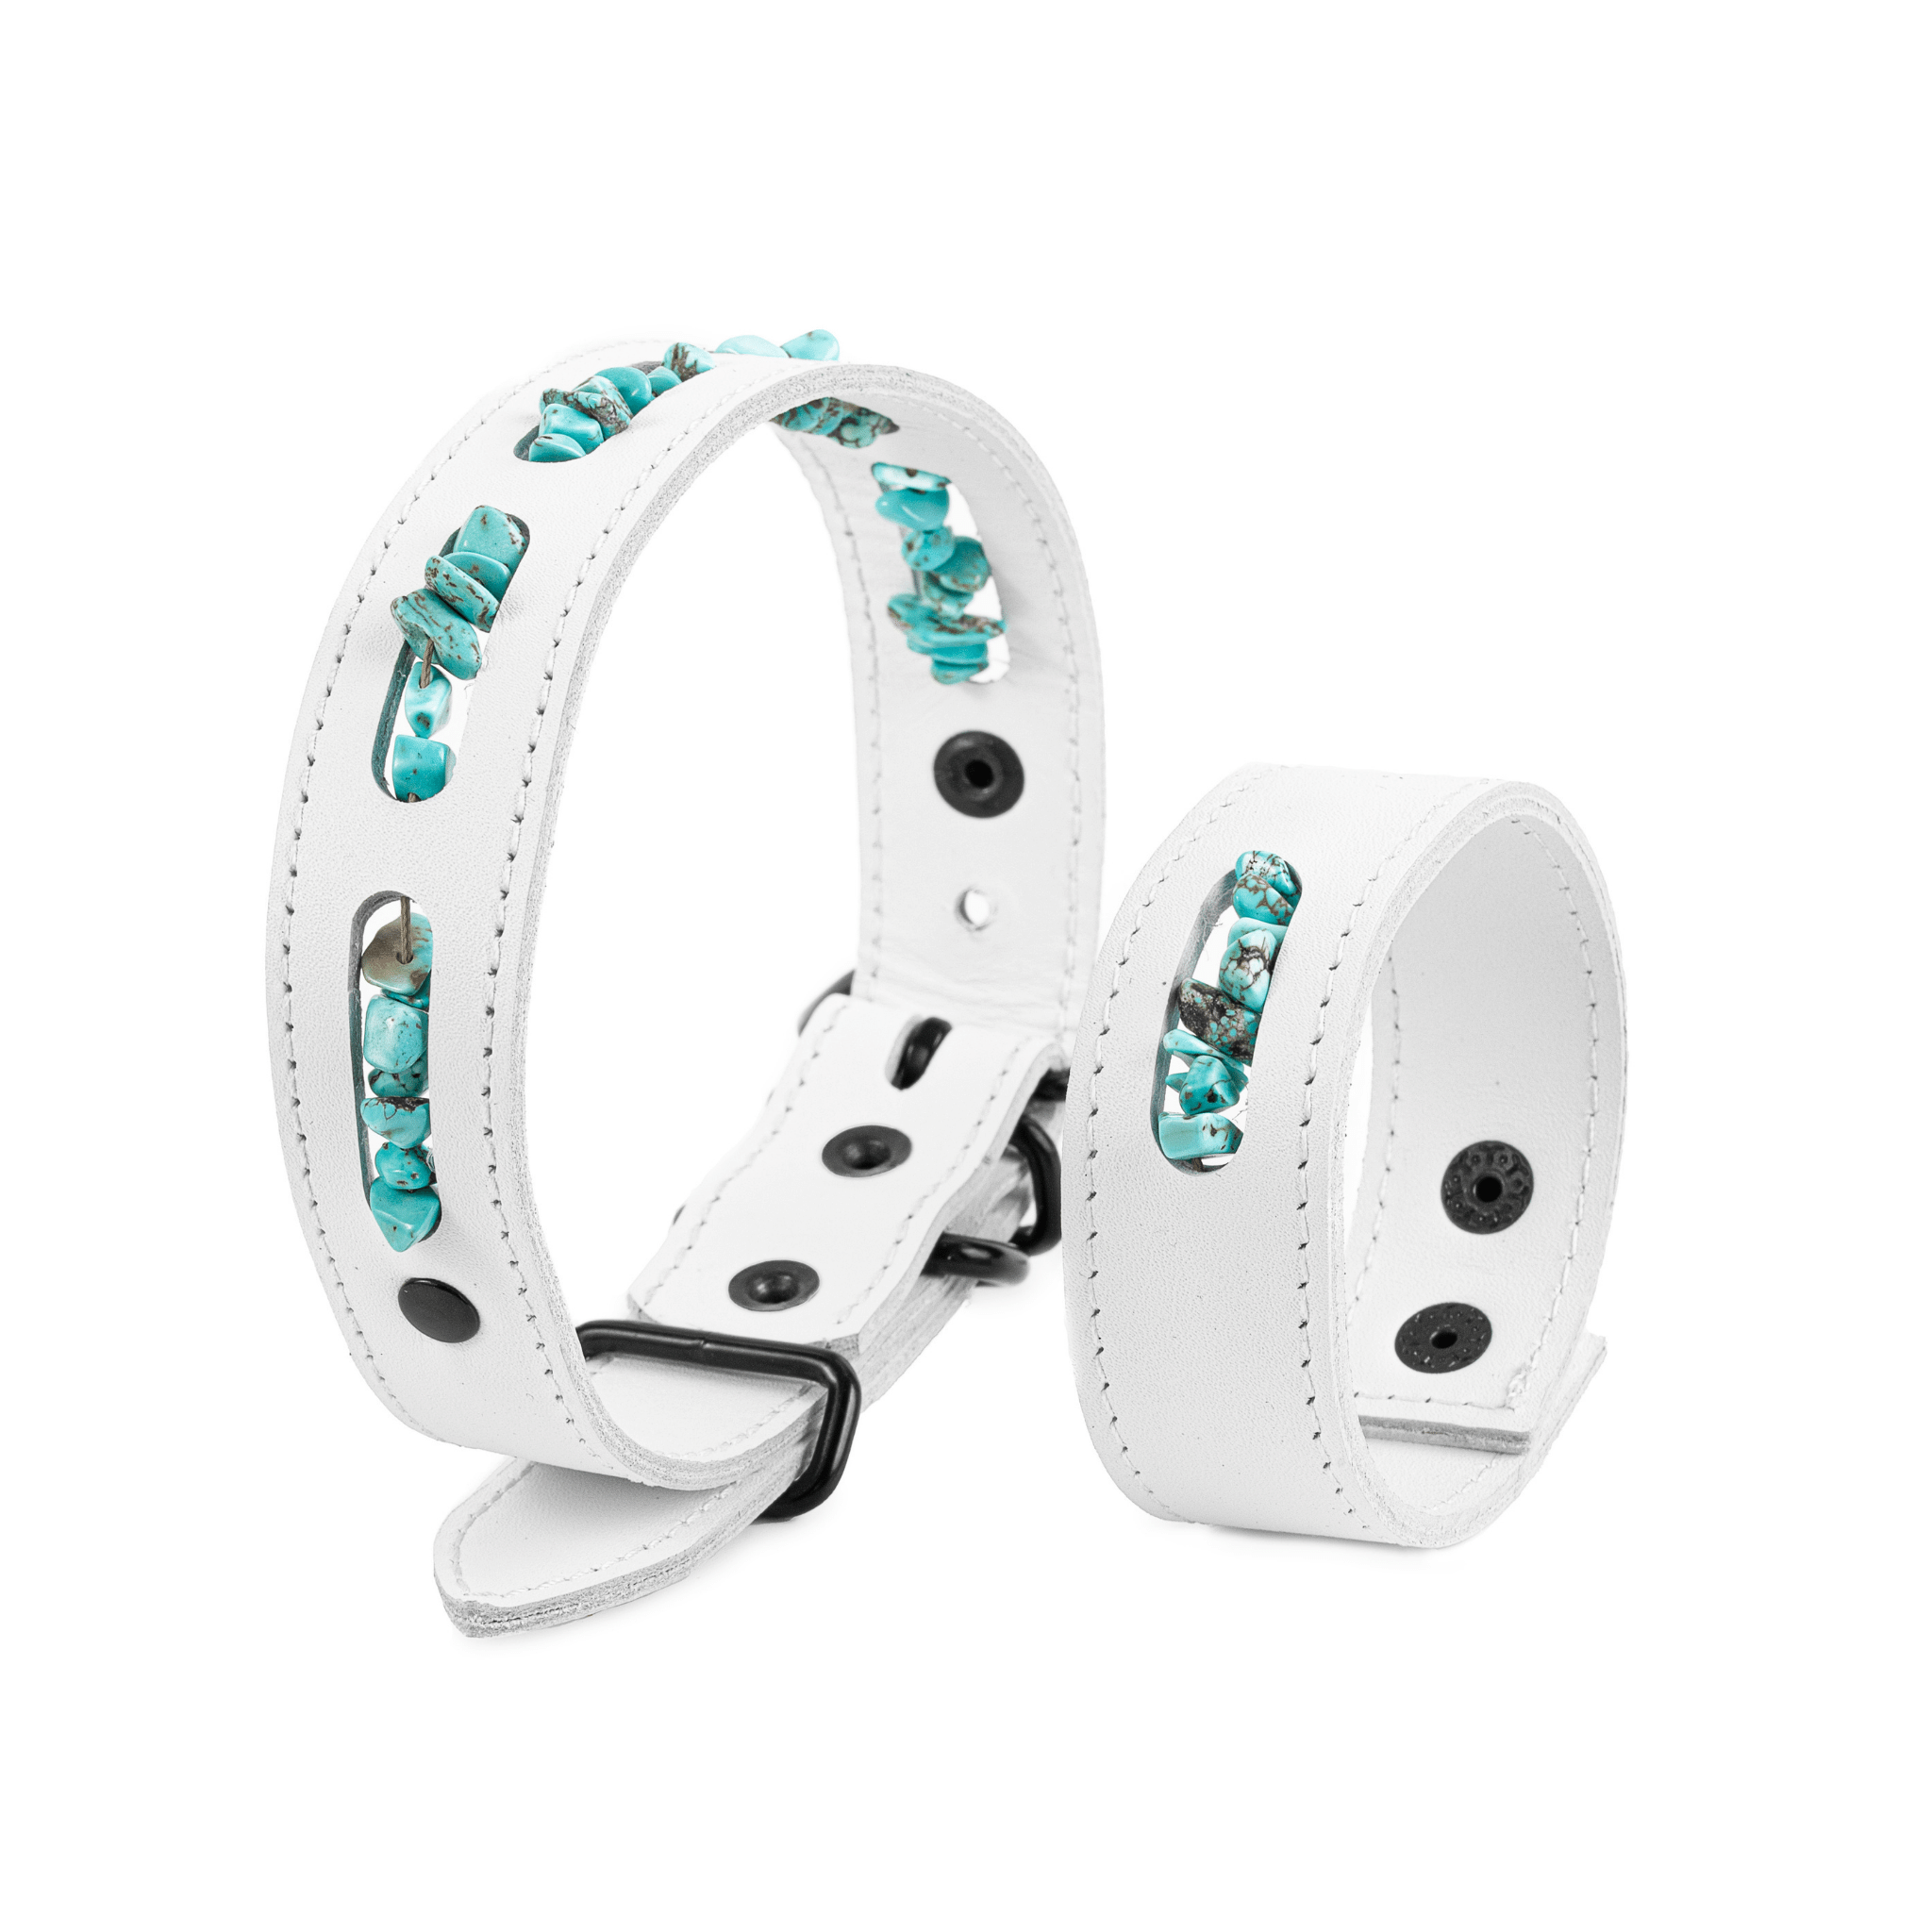 100% Handmade Dog Collar & Master's Bracelet Set - Turquoise Dream - Peppy Pet Naturals